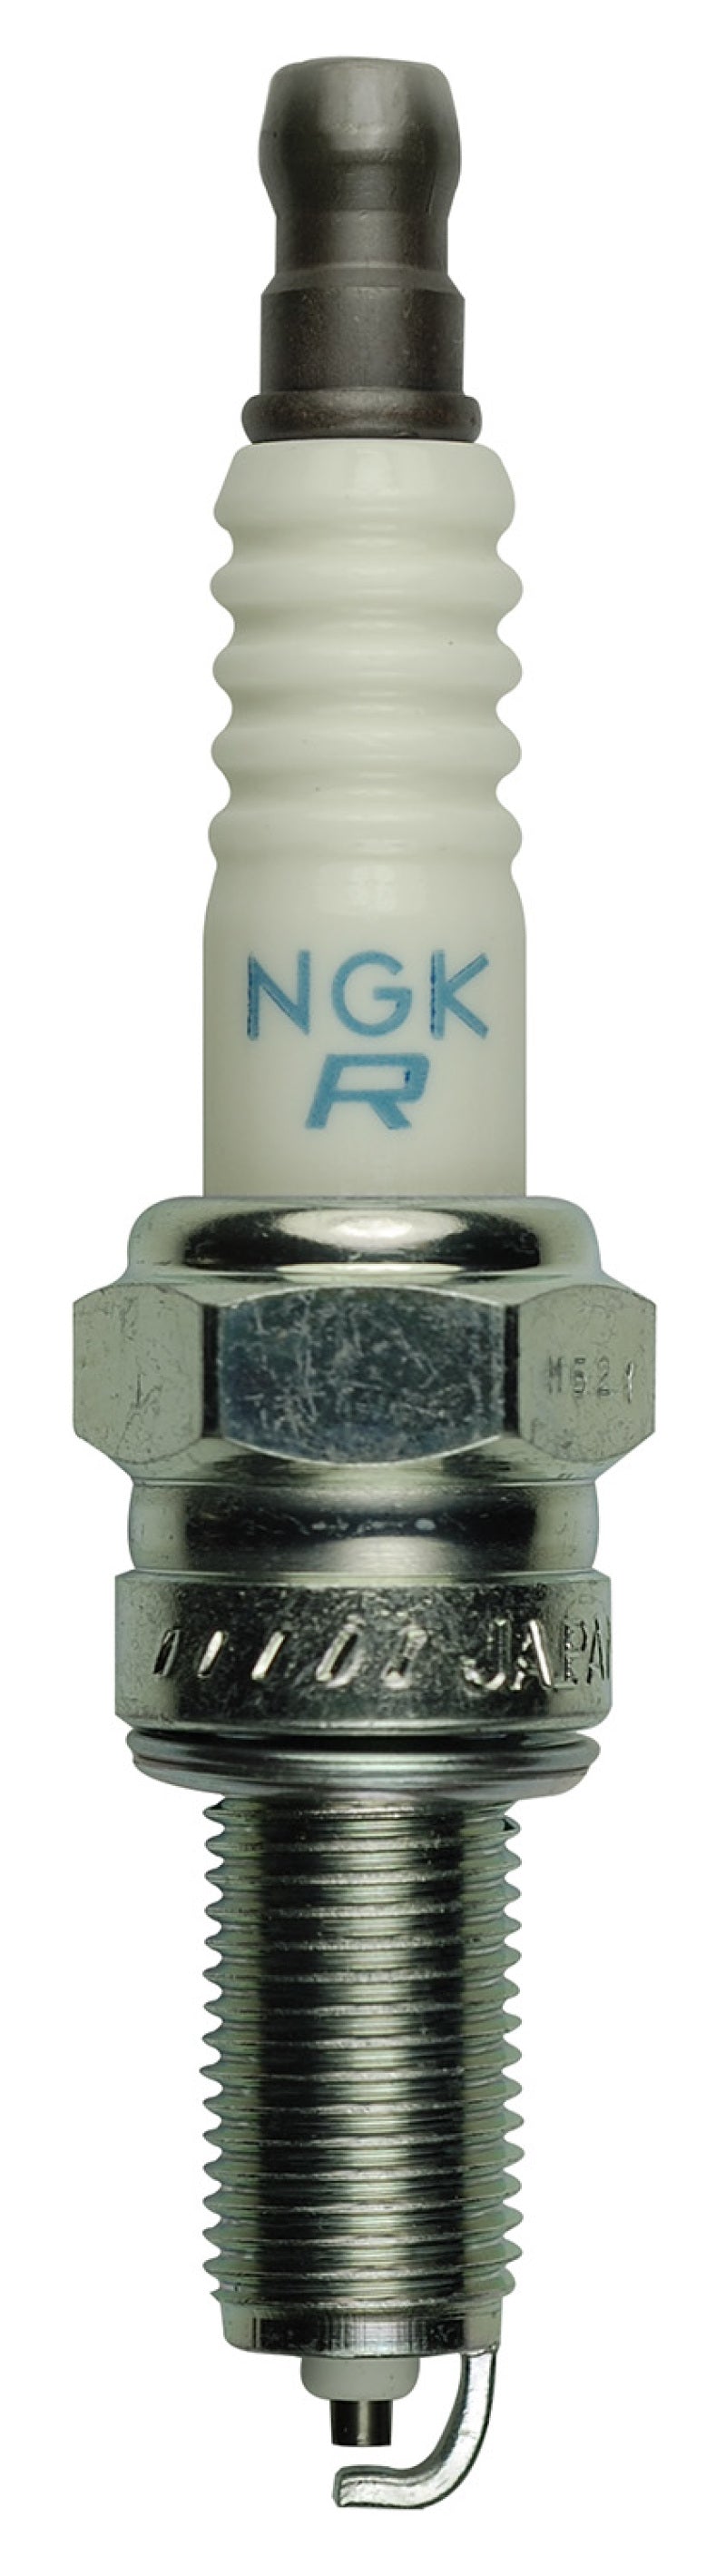 NGK Standard Spark Plug Box of 4 (MR9F) -  Shop now at Performance Car Parts